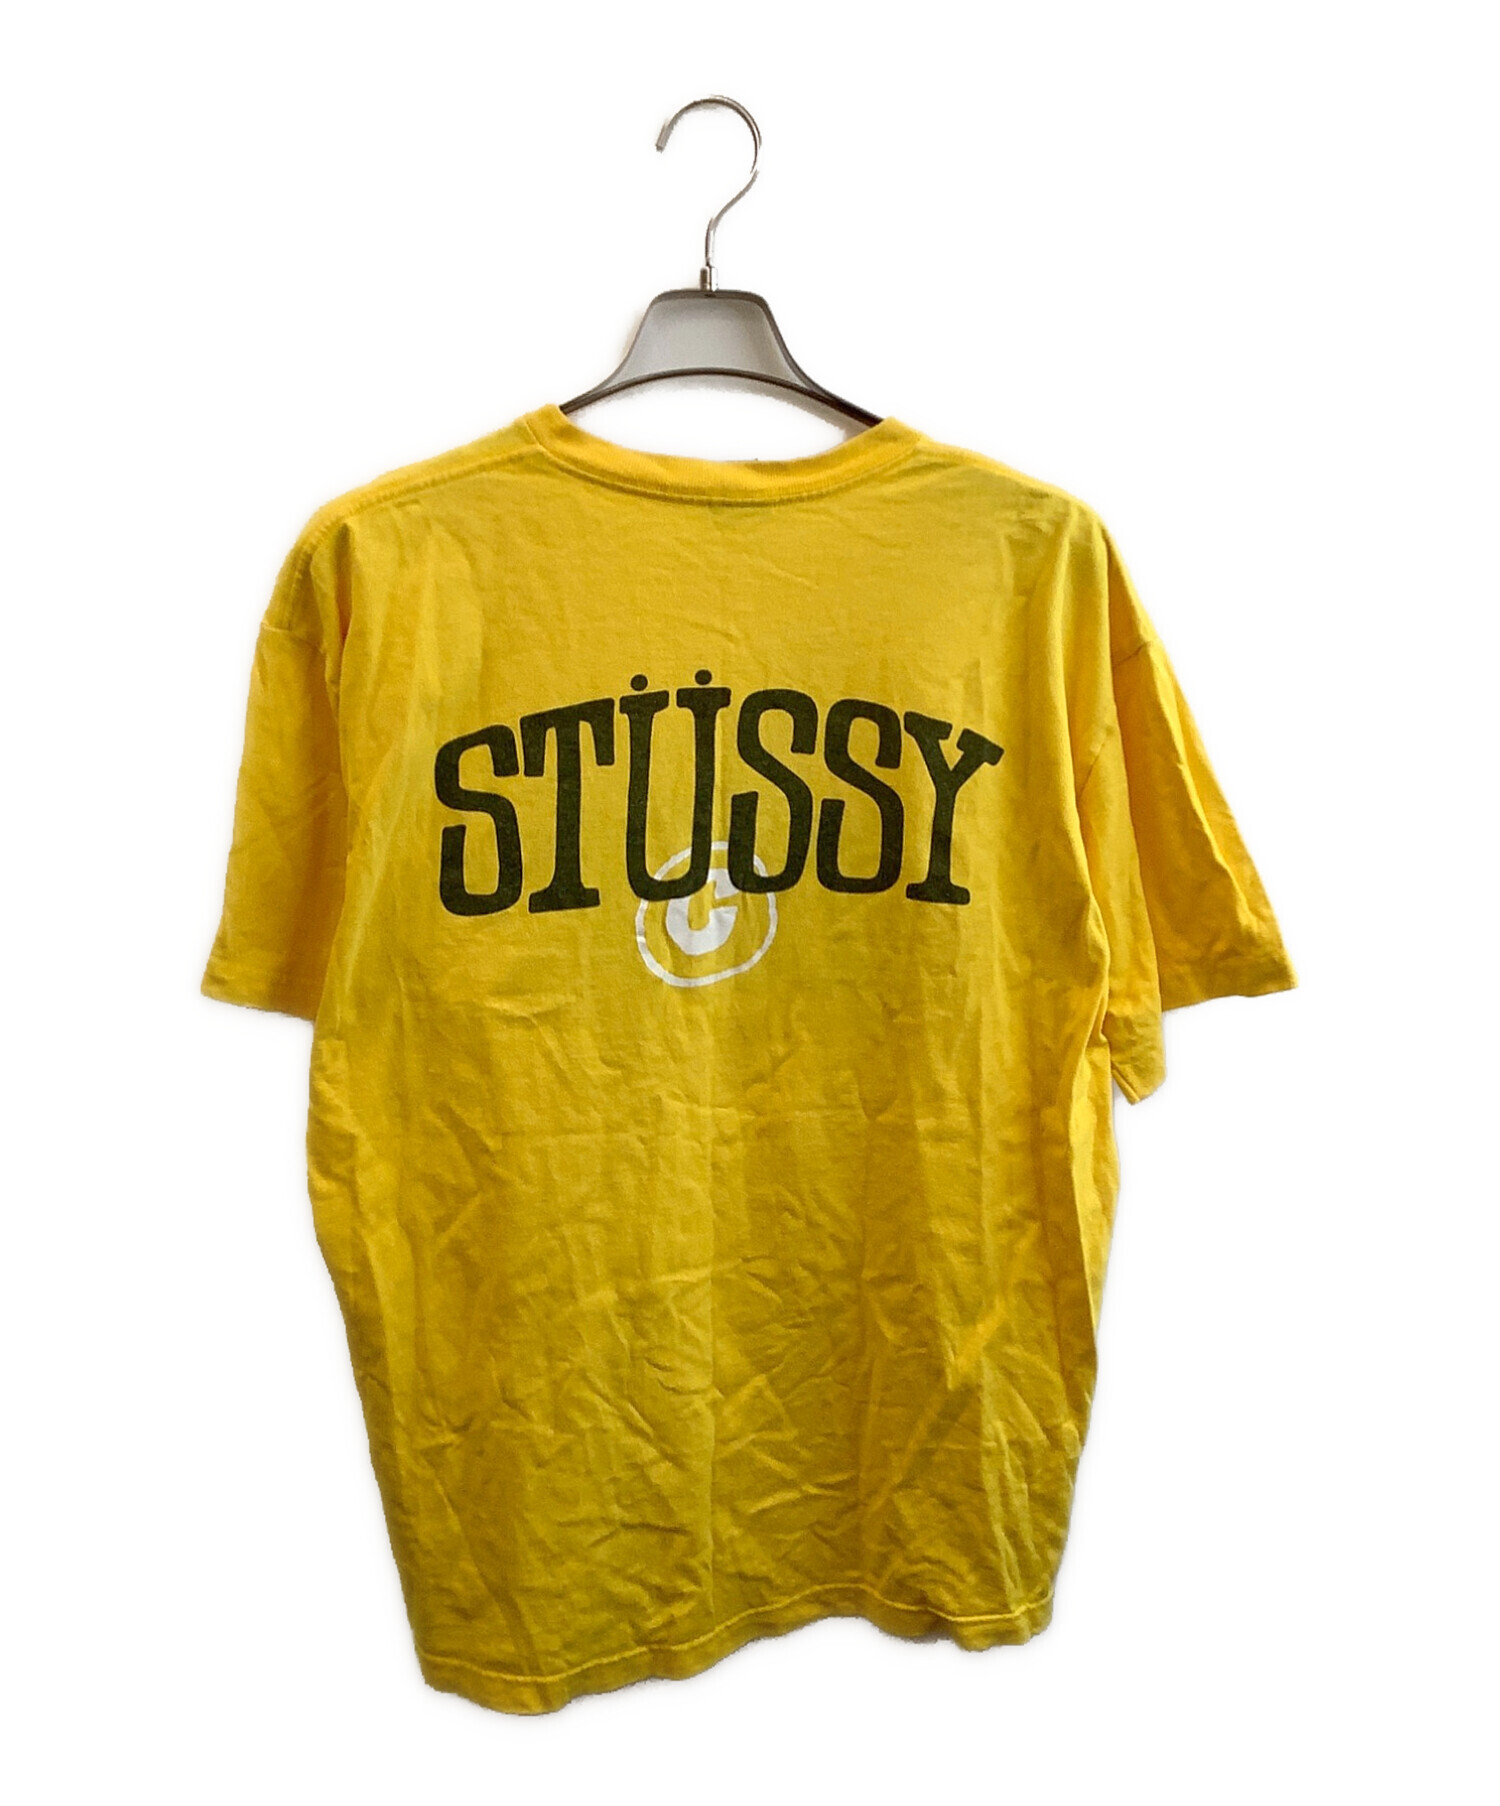 stussy (ステューシー) ヴィンテージTシャツ イエロー サイズ:XL